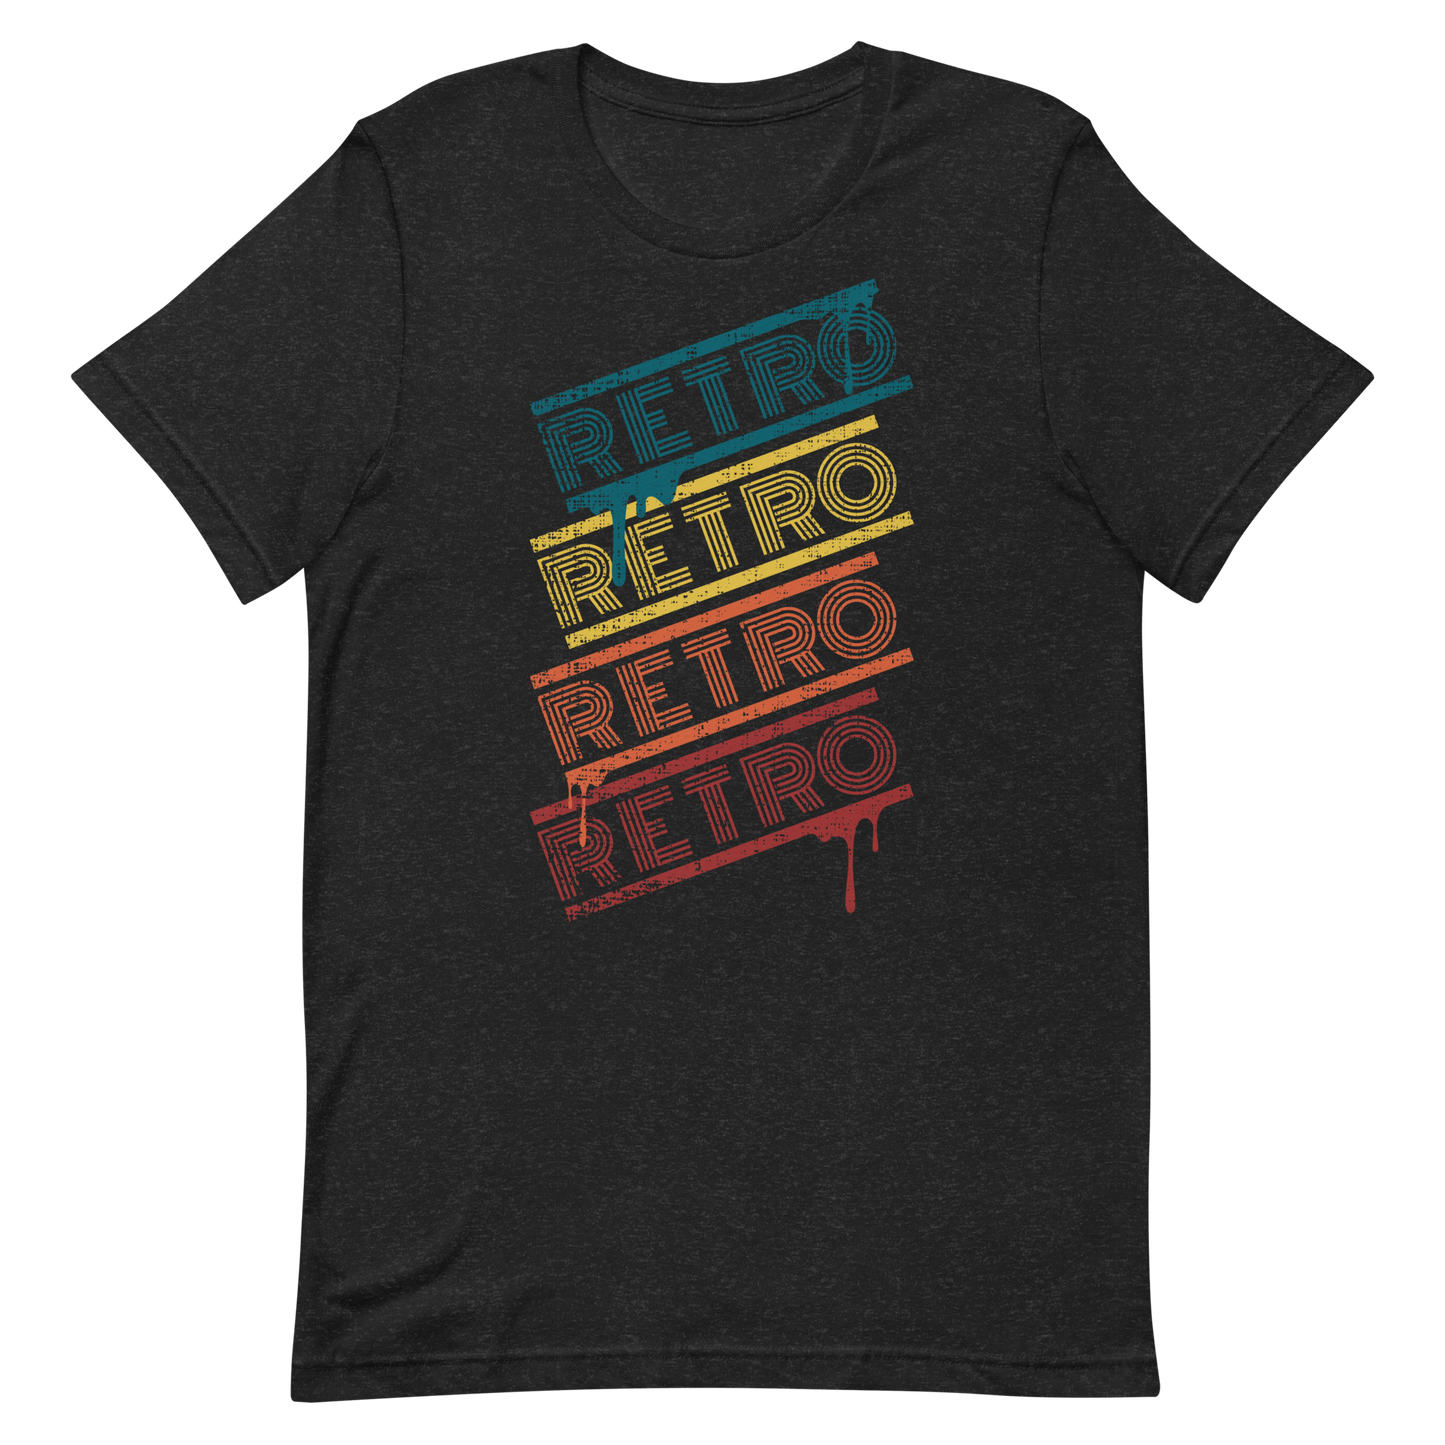 Retro Unisex T-Shirt - Colorful Retro Typography Design Black Heather